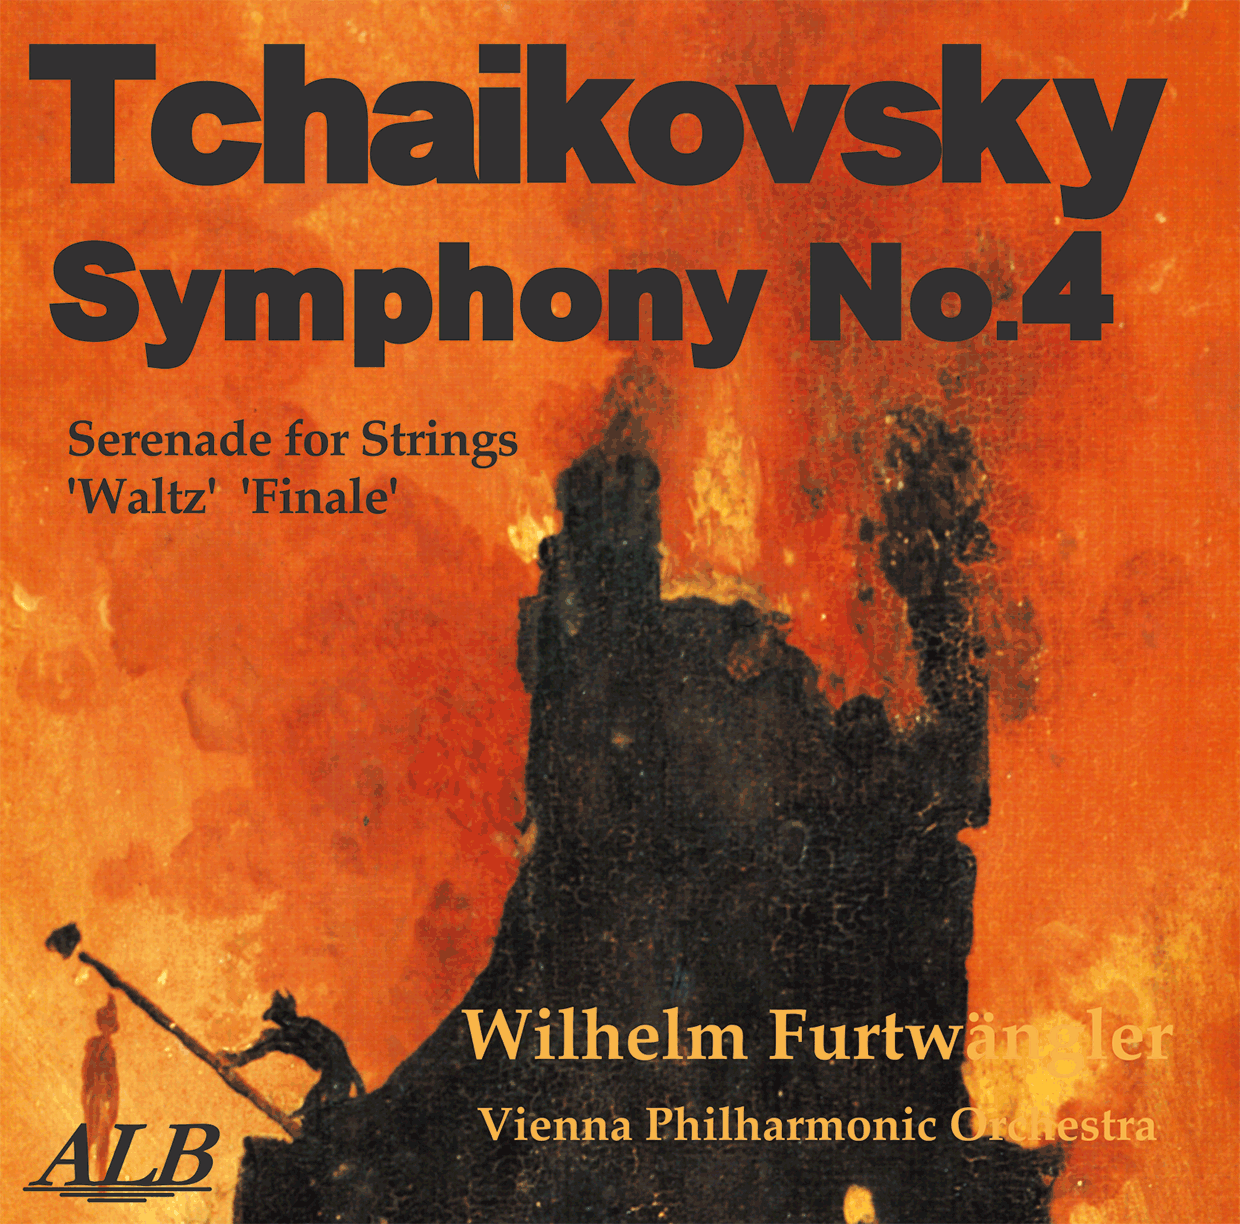 ALB15,フルトヴェングラー,ウィーン・フィルハーモニー管弦楽団,チャイコフスキー 交響曲第４番,チャイコフスキー 弦楽セレナード